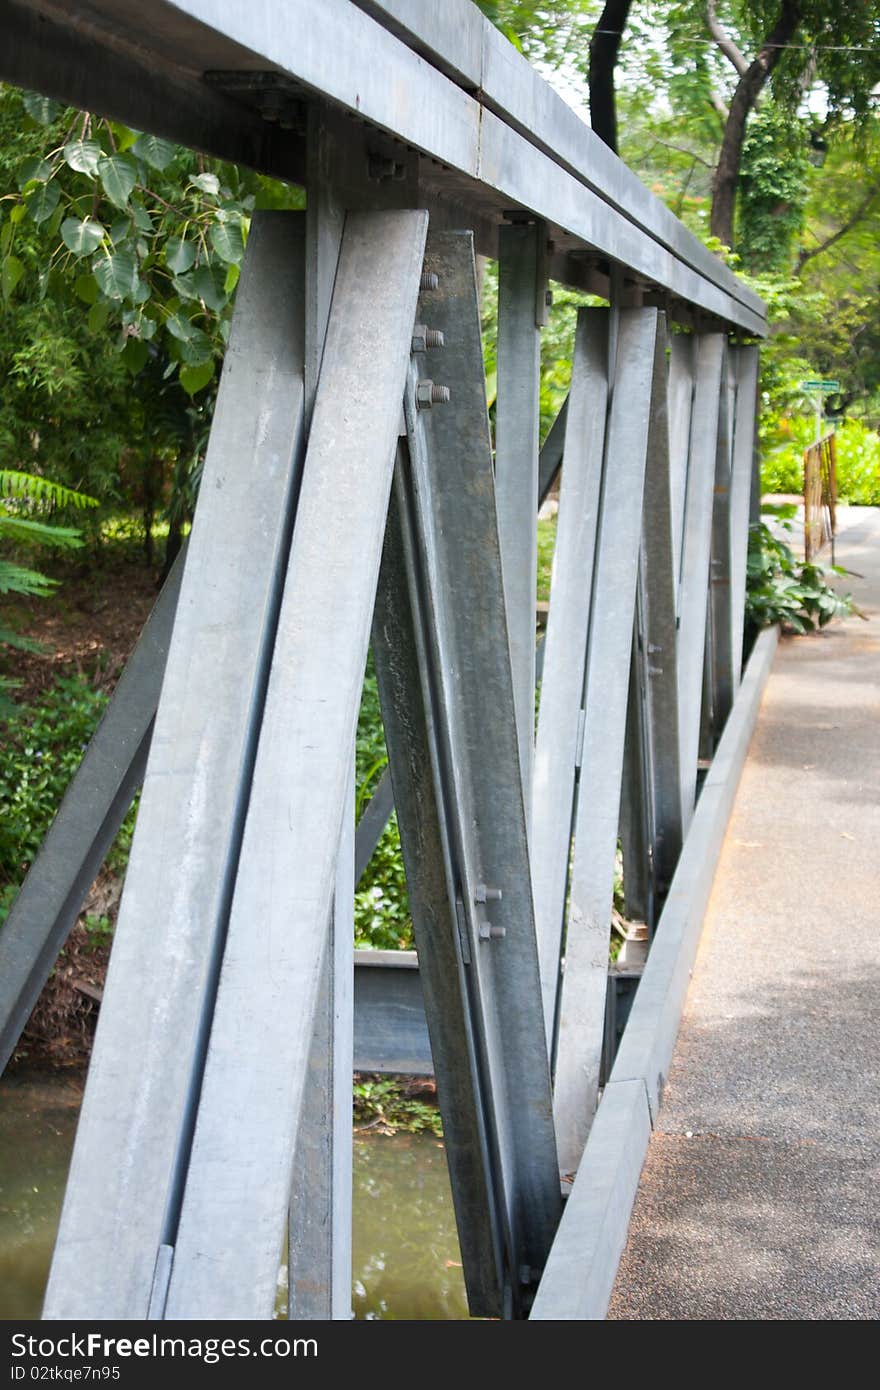 Bridge iron over water in the park, bridge in the park. Bridge iron over water in the park, bridge in the park